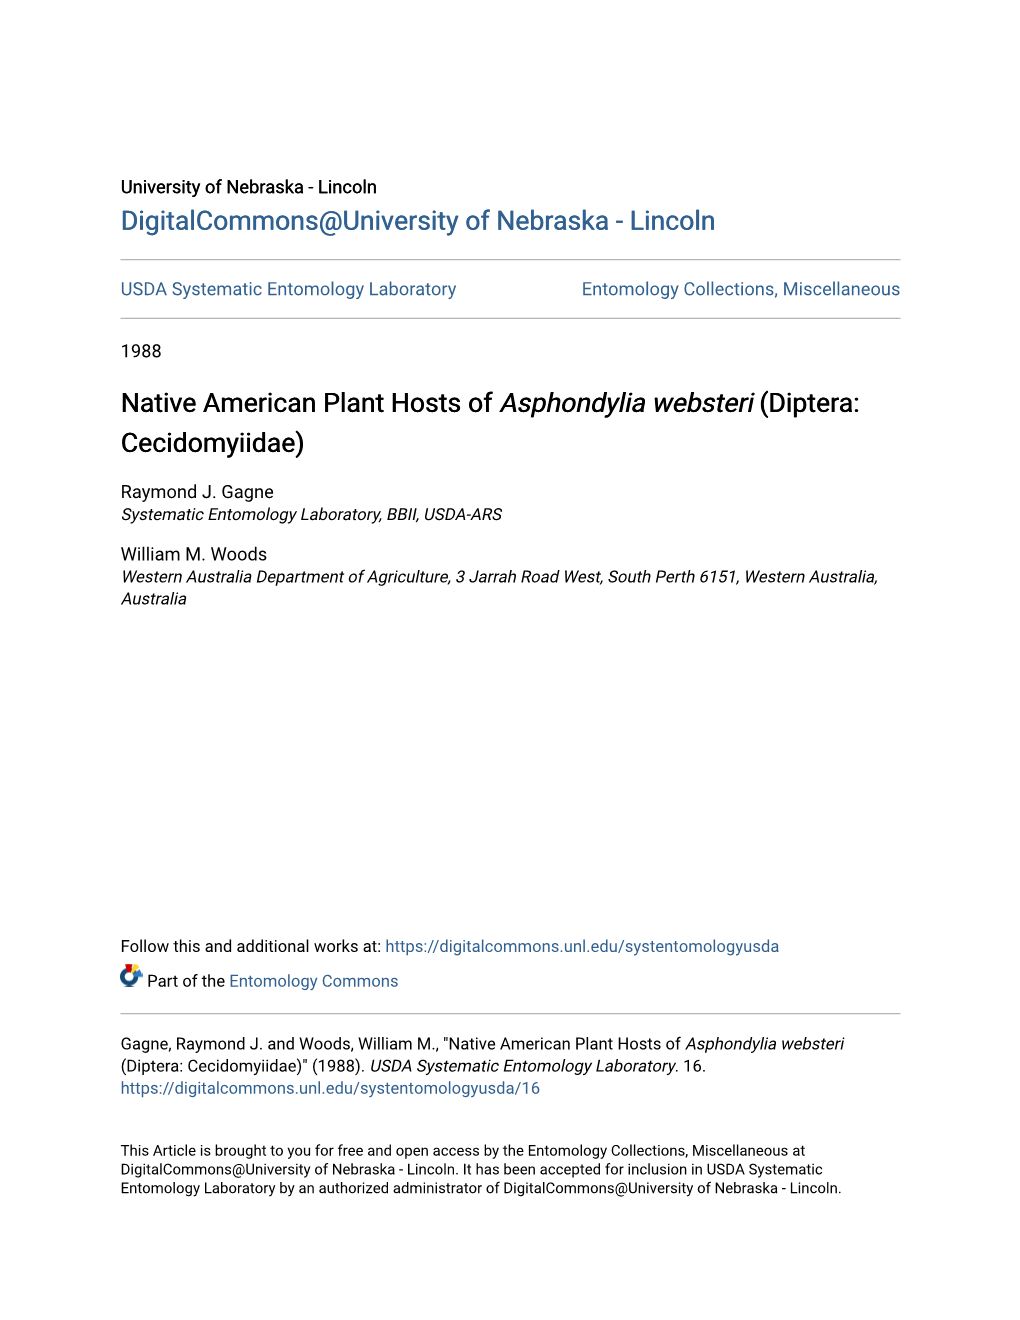 Native American Plant Hosts of Asphondylia Websteri (Diptera: Cecidomyiidae)